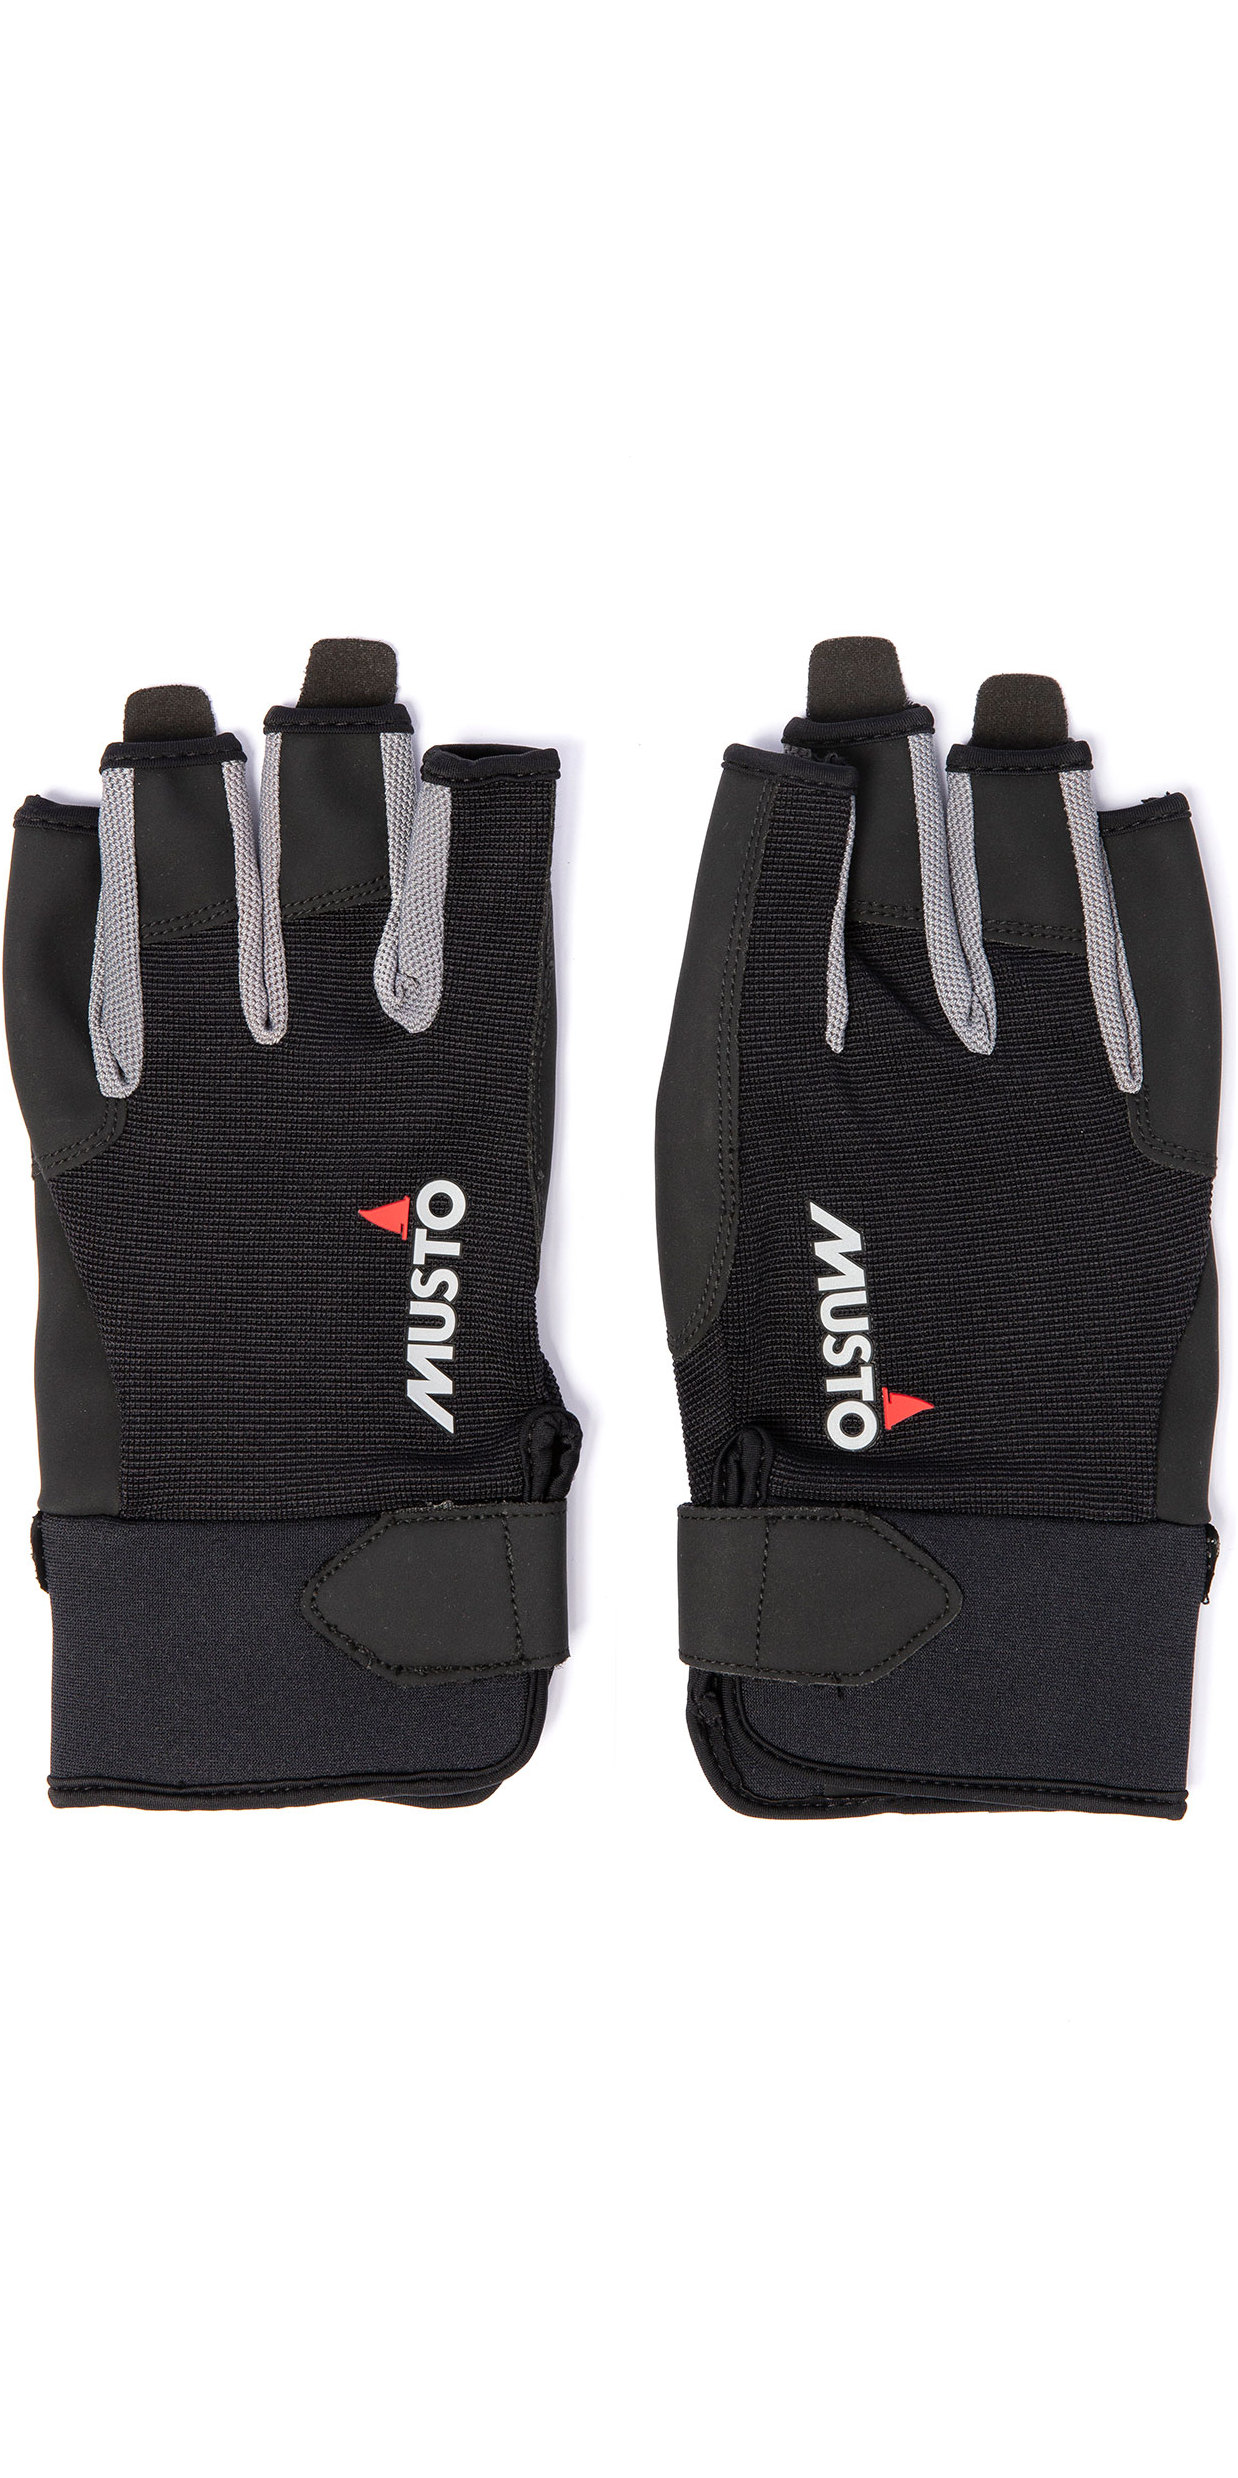 Musto Performance Short Finger Sailing Gloves 2020 Black 